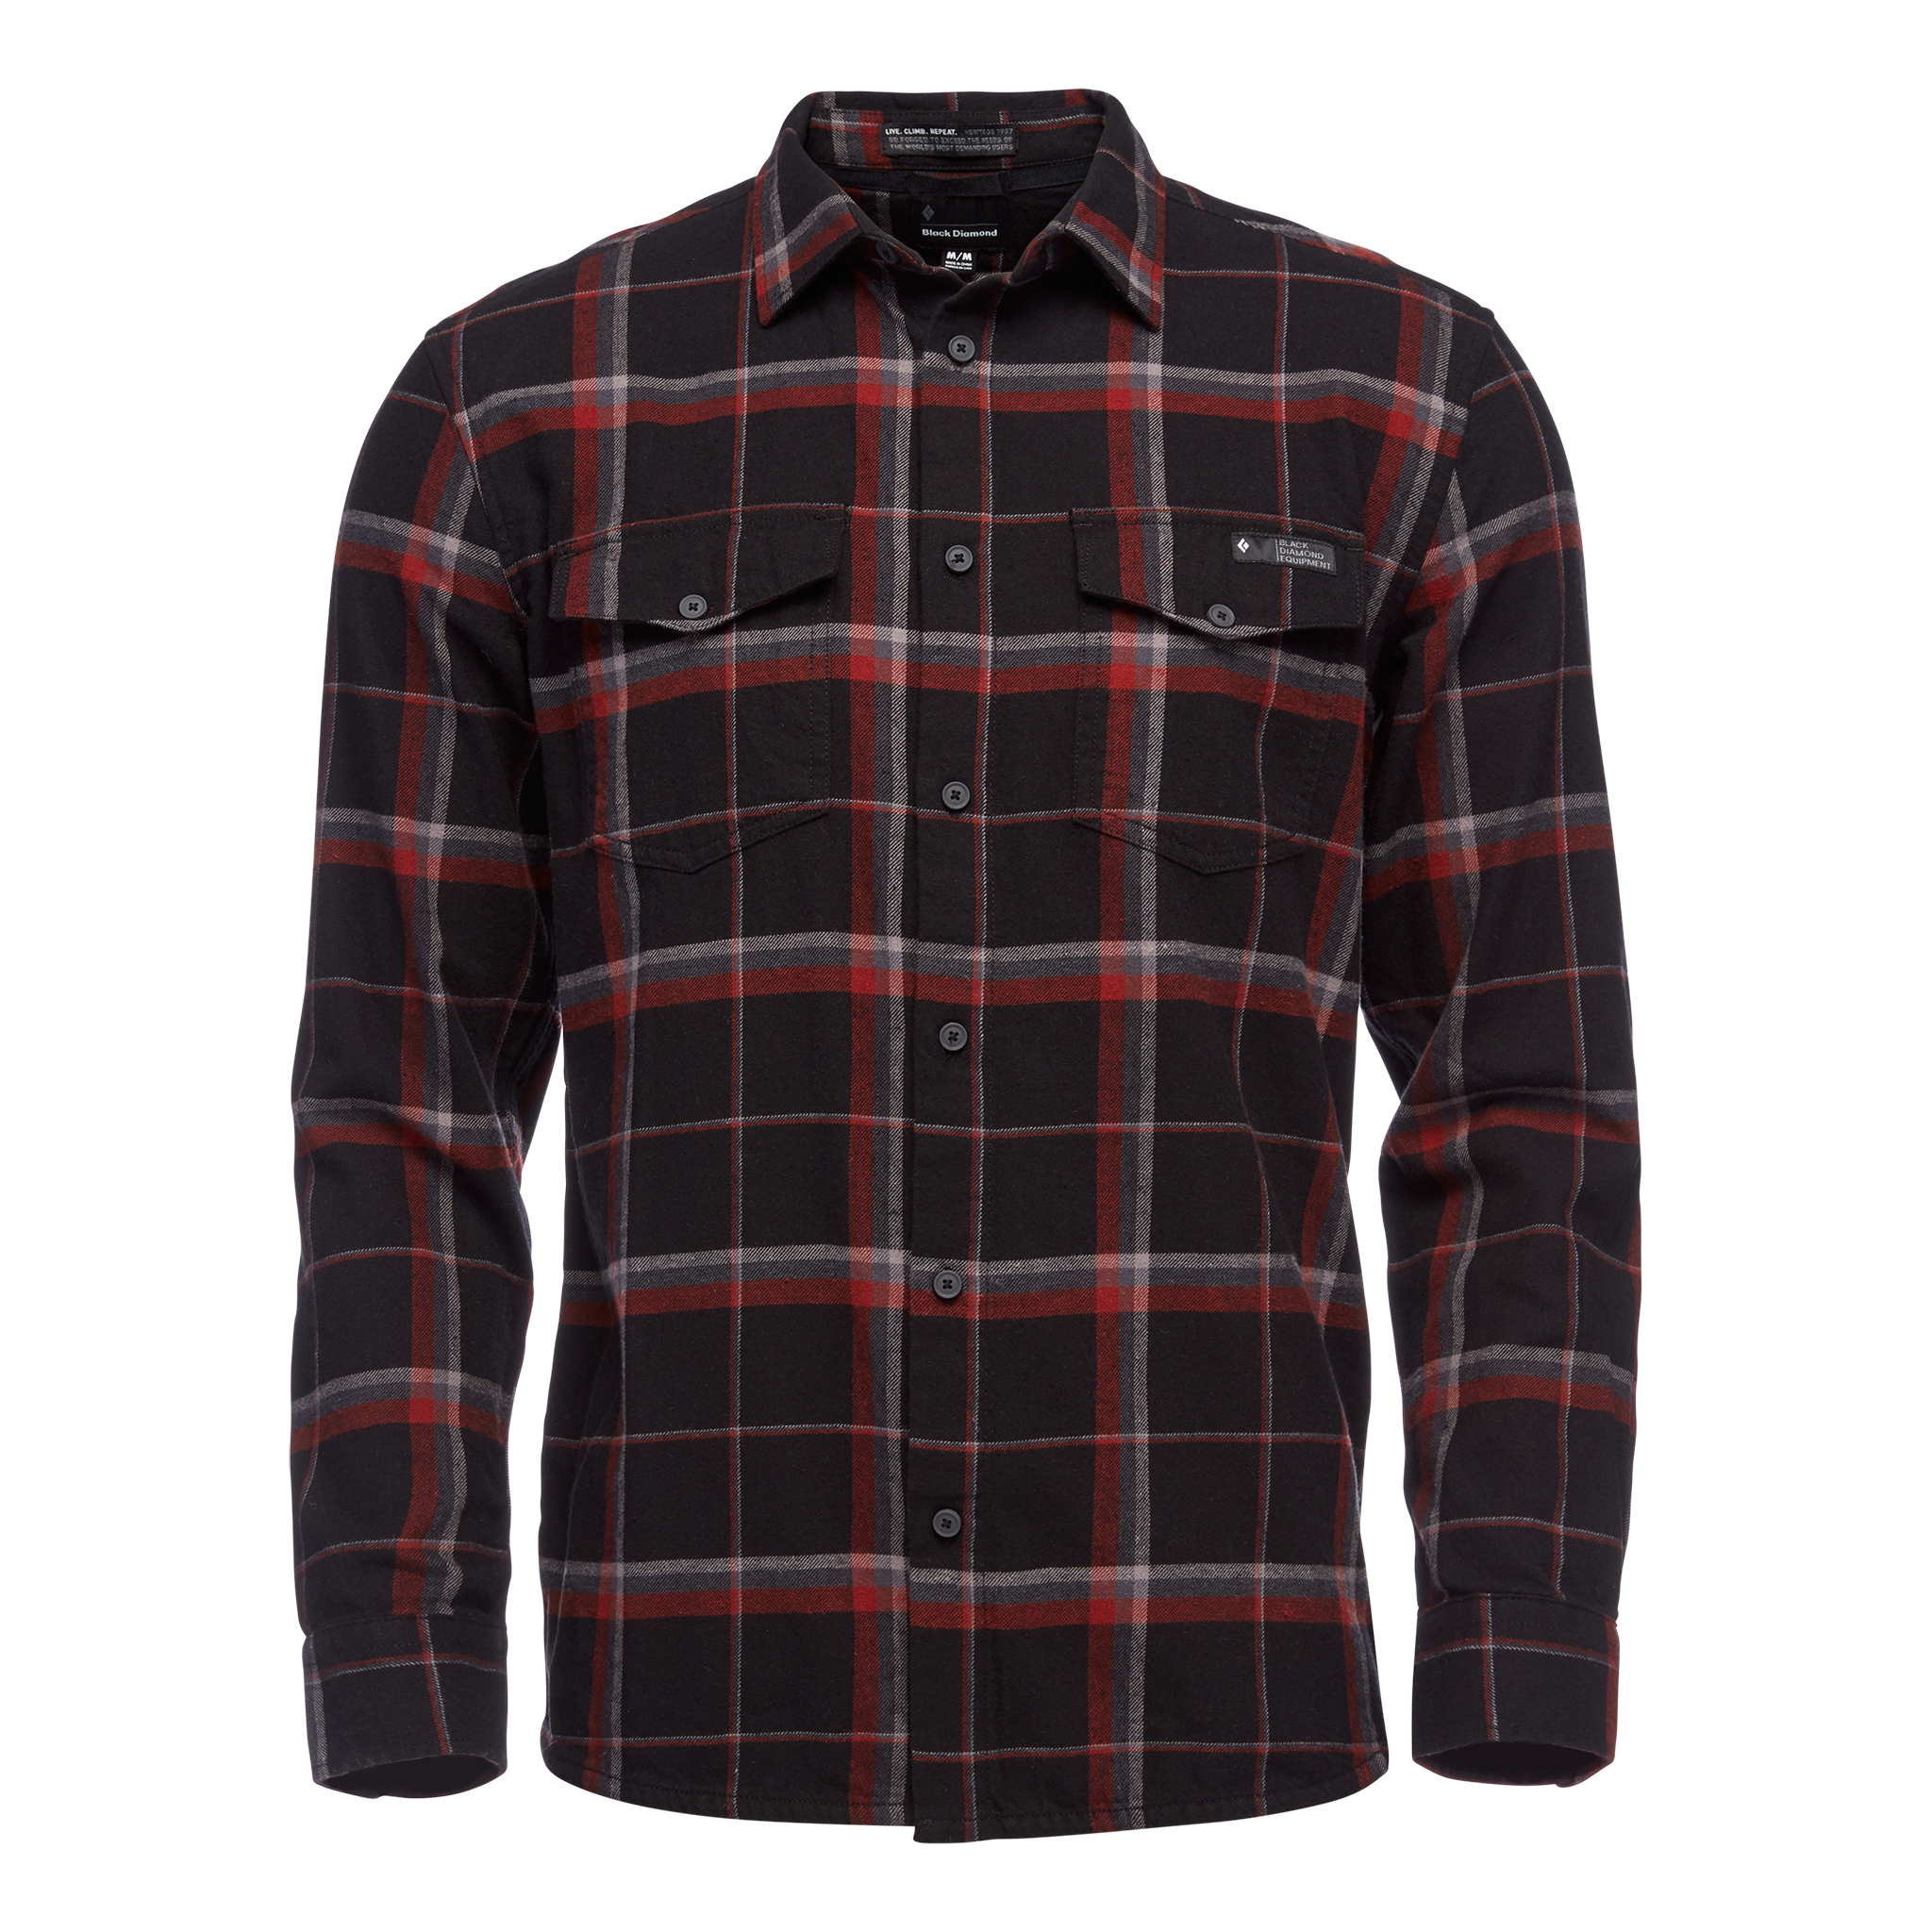 Black Diamond Equipment Men's Valley Flannel Shirt, XL Black/Nickel/Plaid